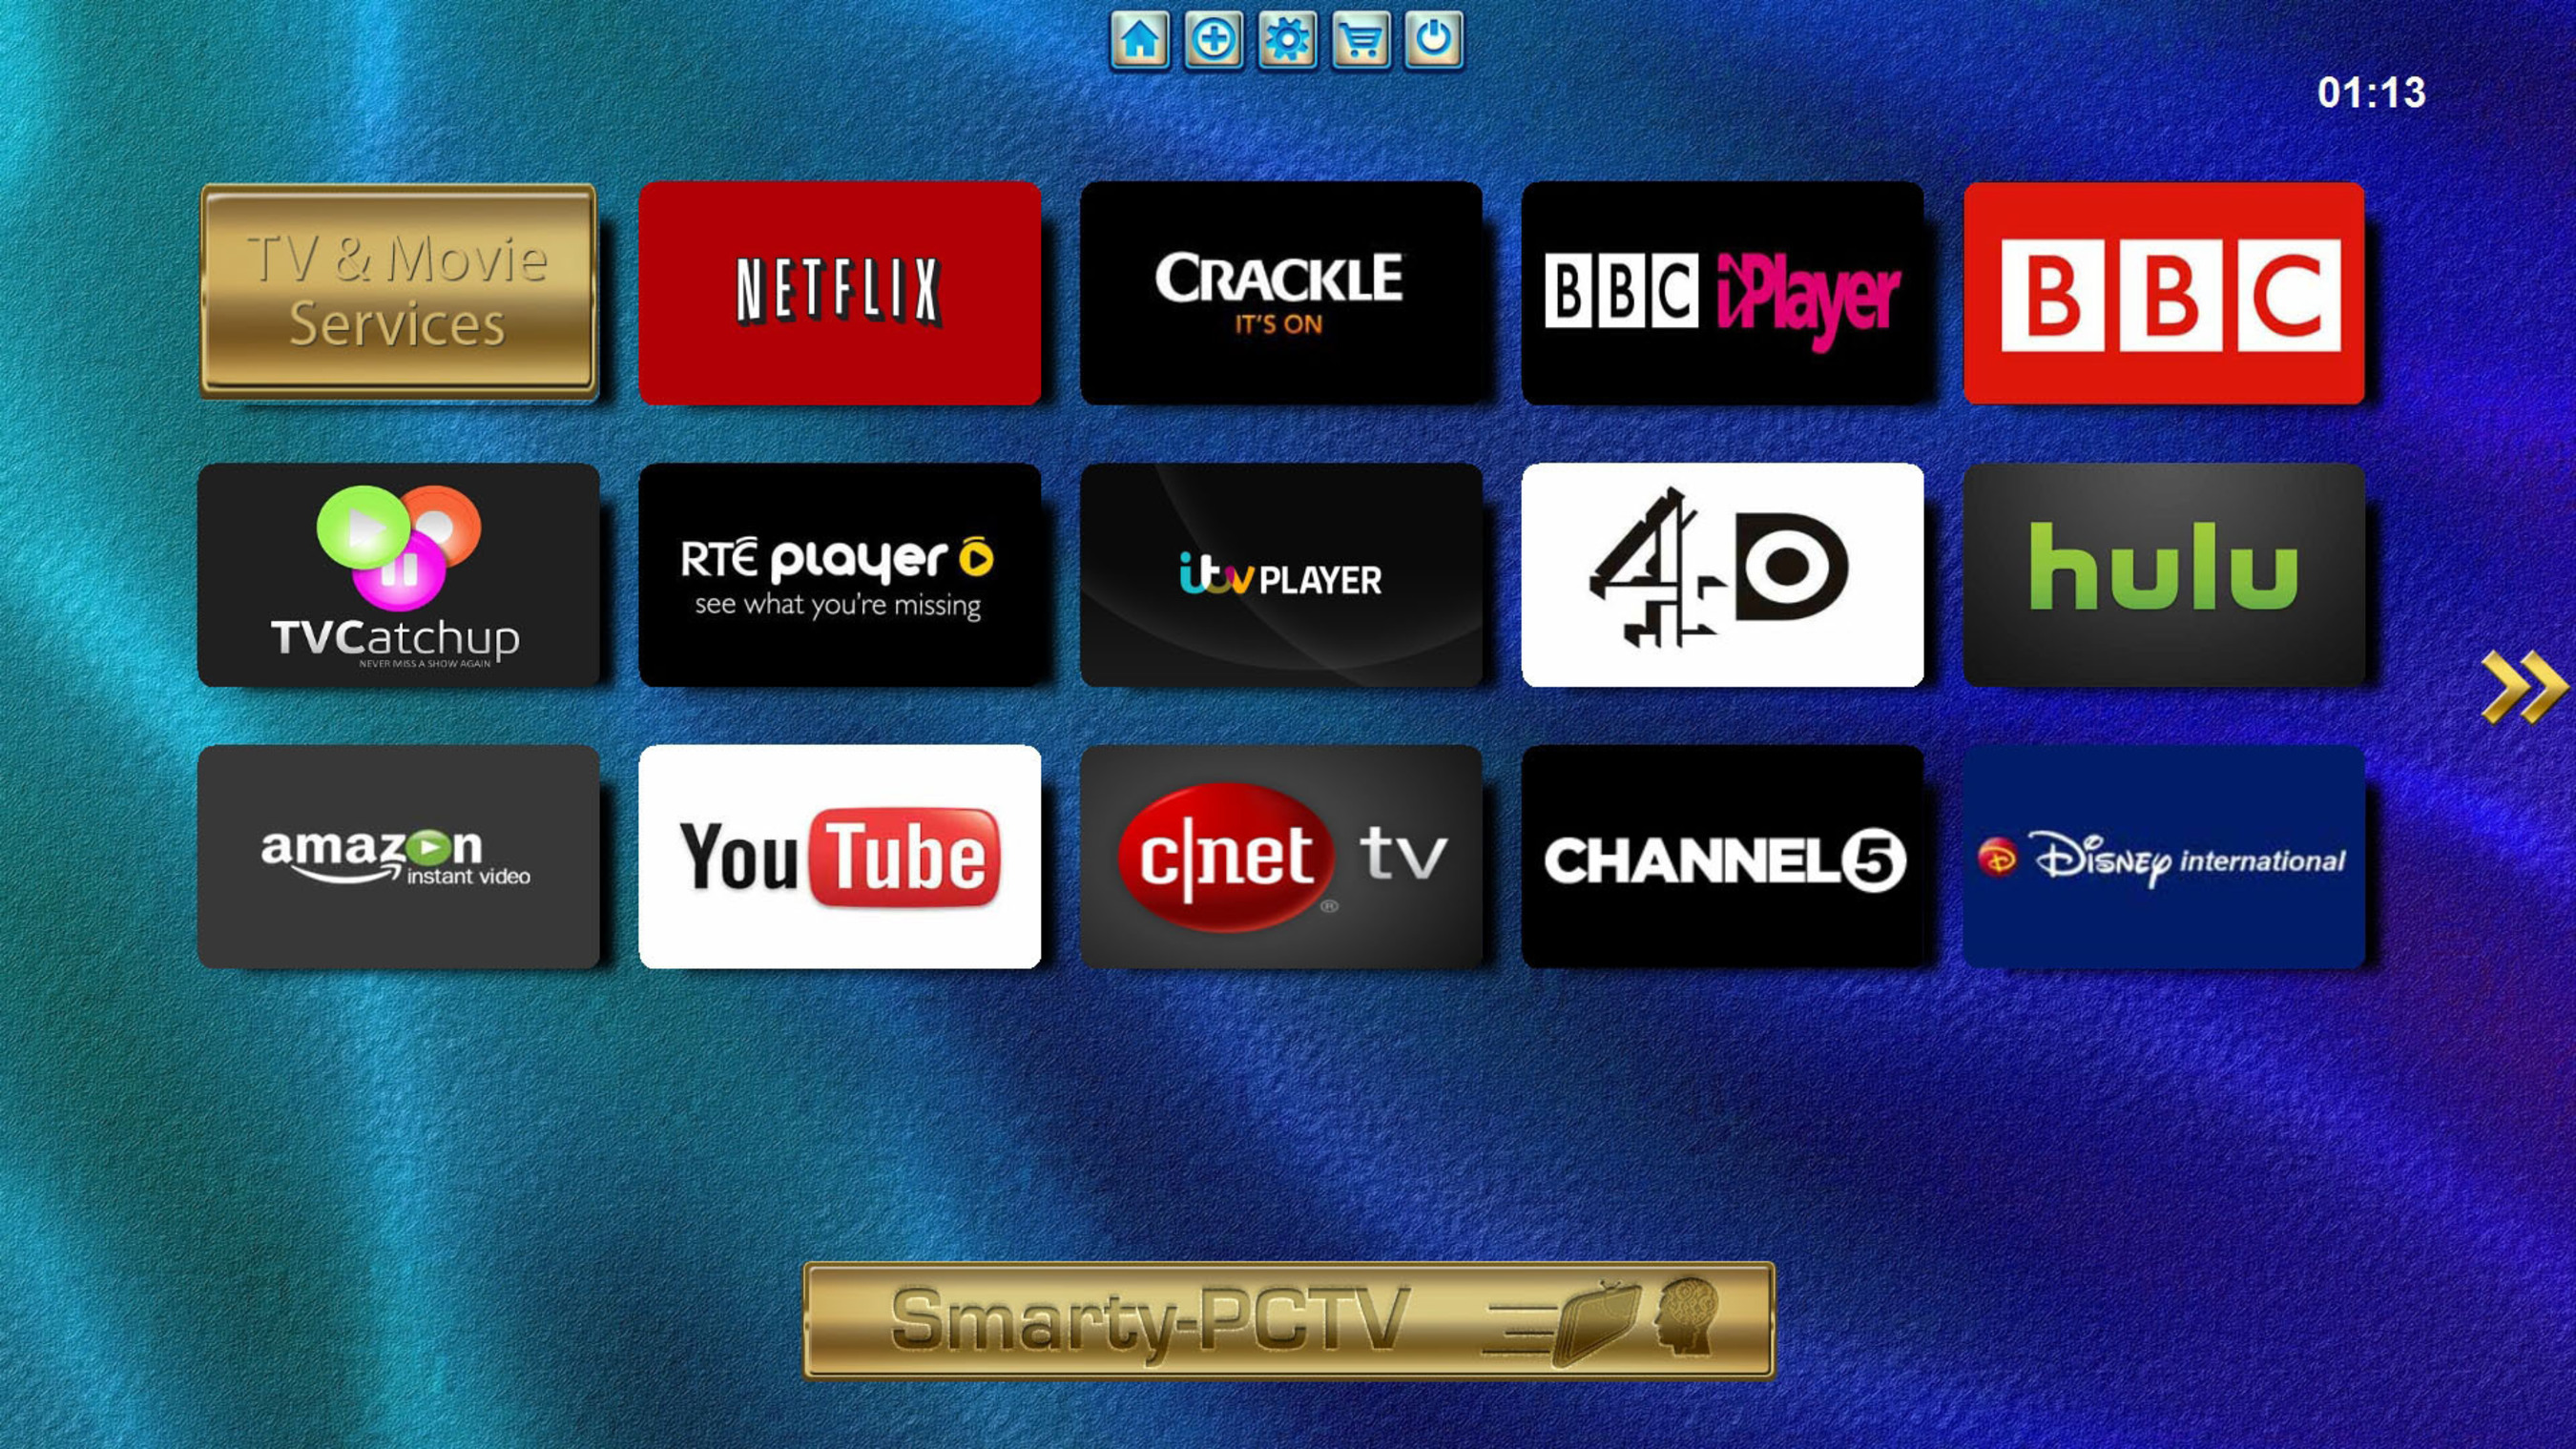 Smarty PCTV - TV and Movies. (PRNewsFoto/Smarty PCTV) (PRNewsFoto/SMARTY PCTV)